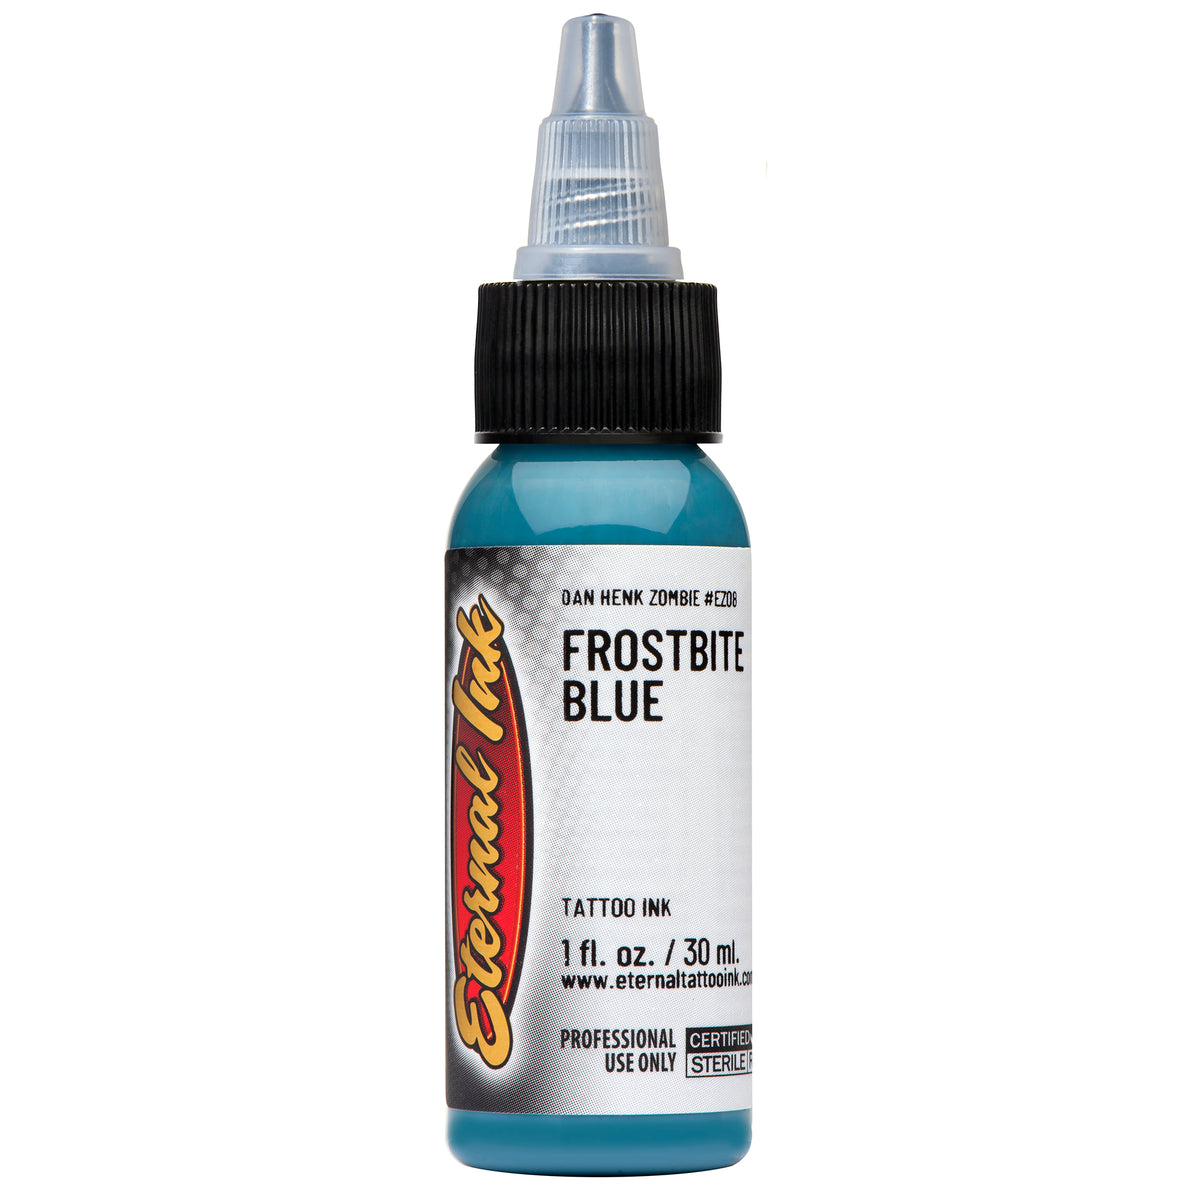 Frostbite Blue